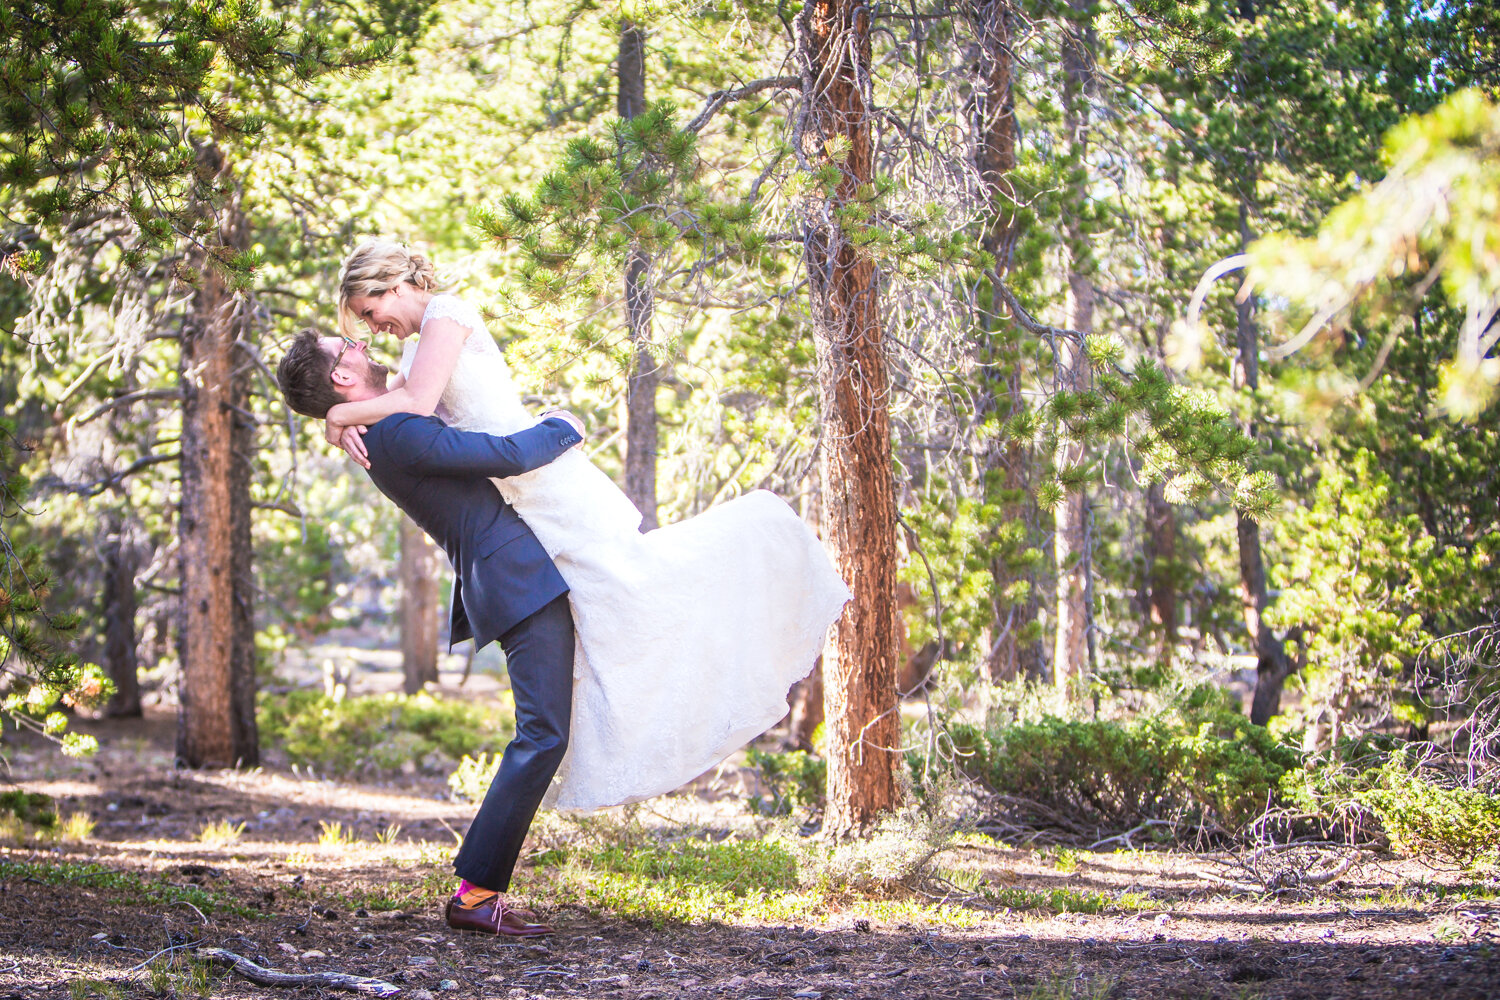  Nederland Colorado Wedding by JMGant Photography.&nbsp; 